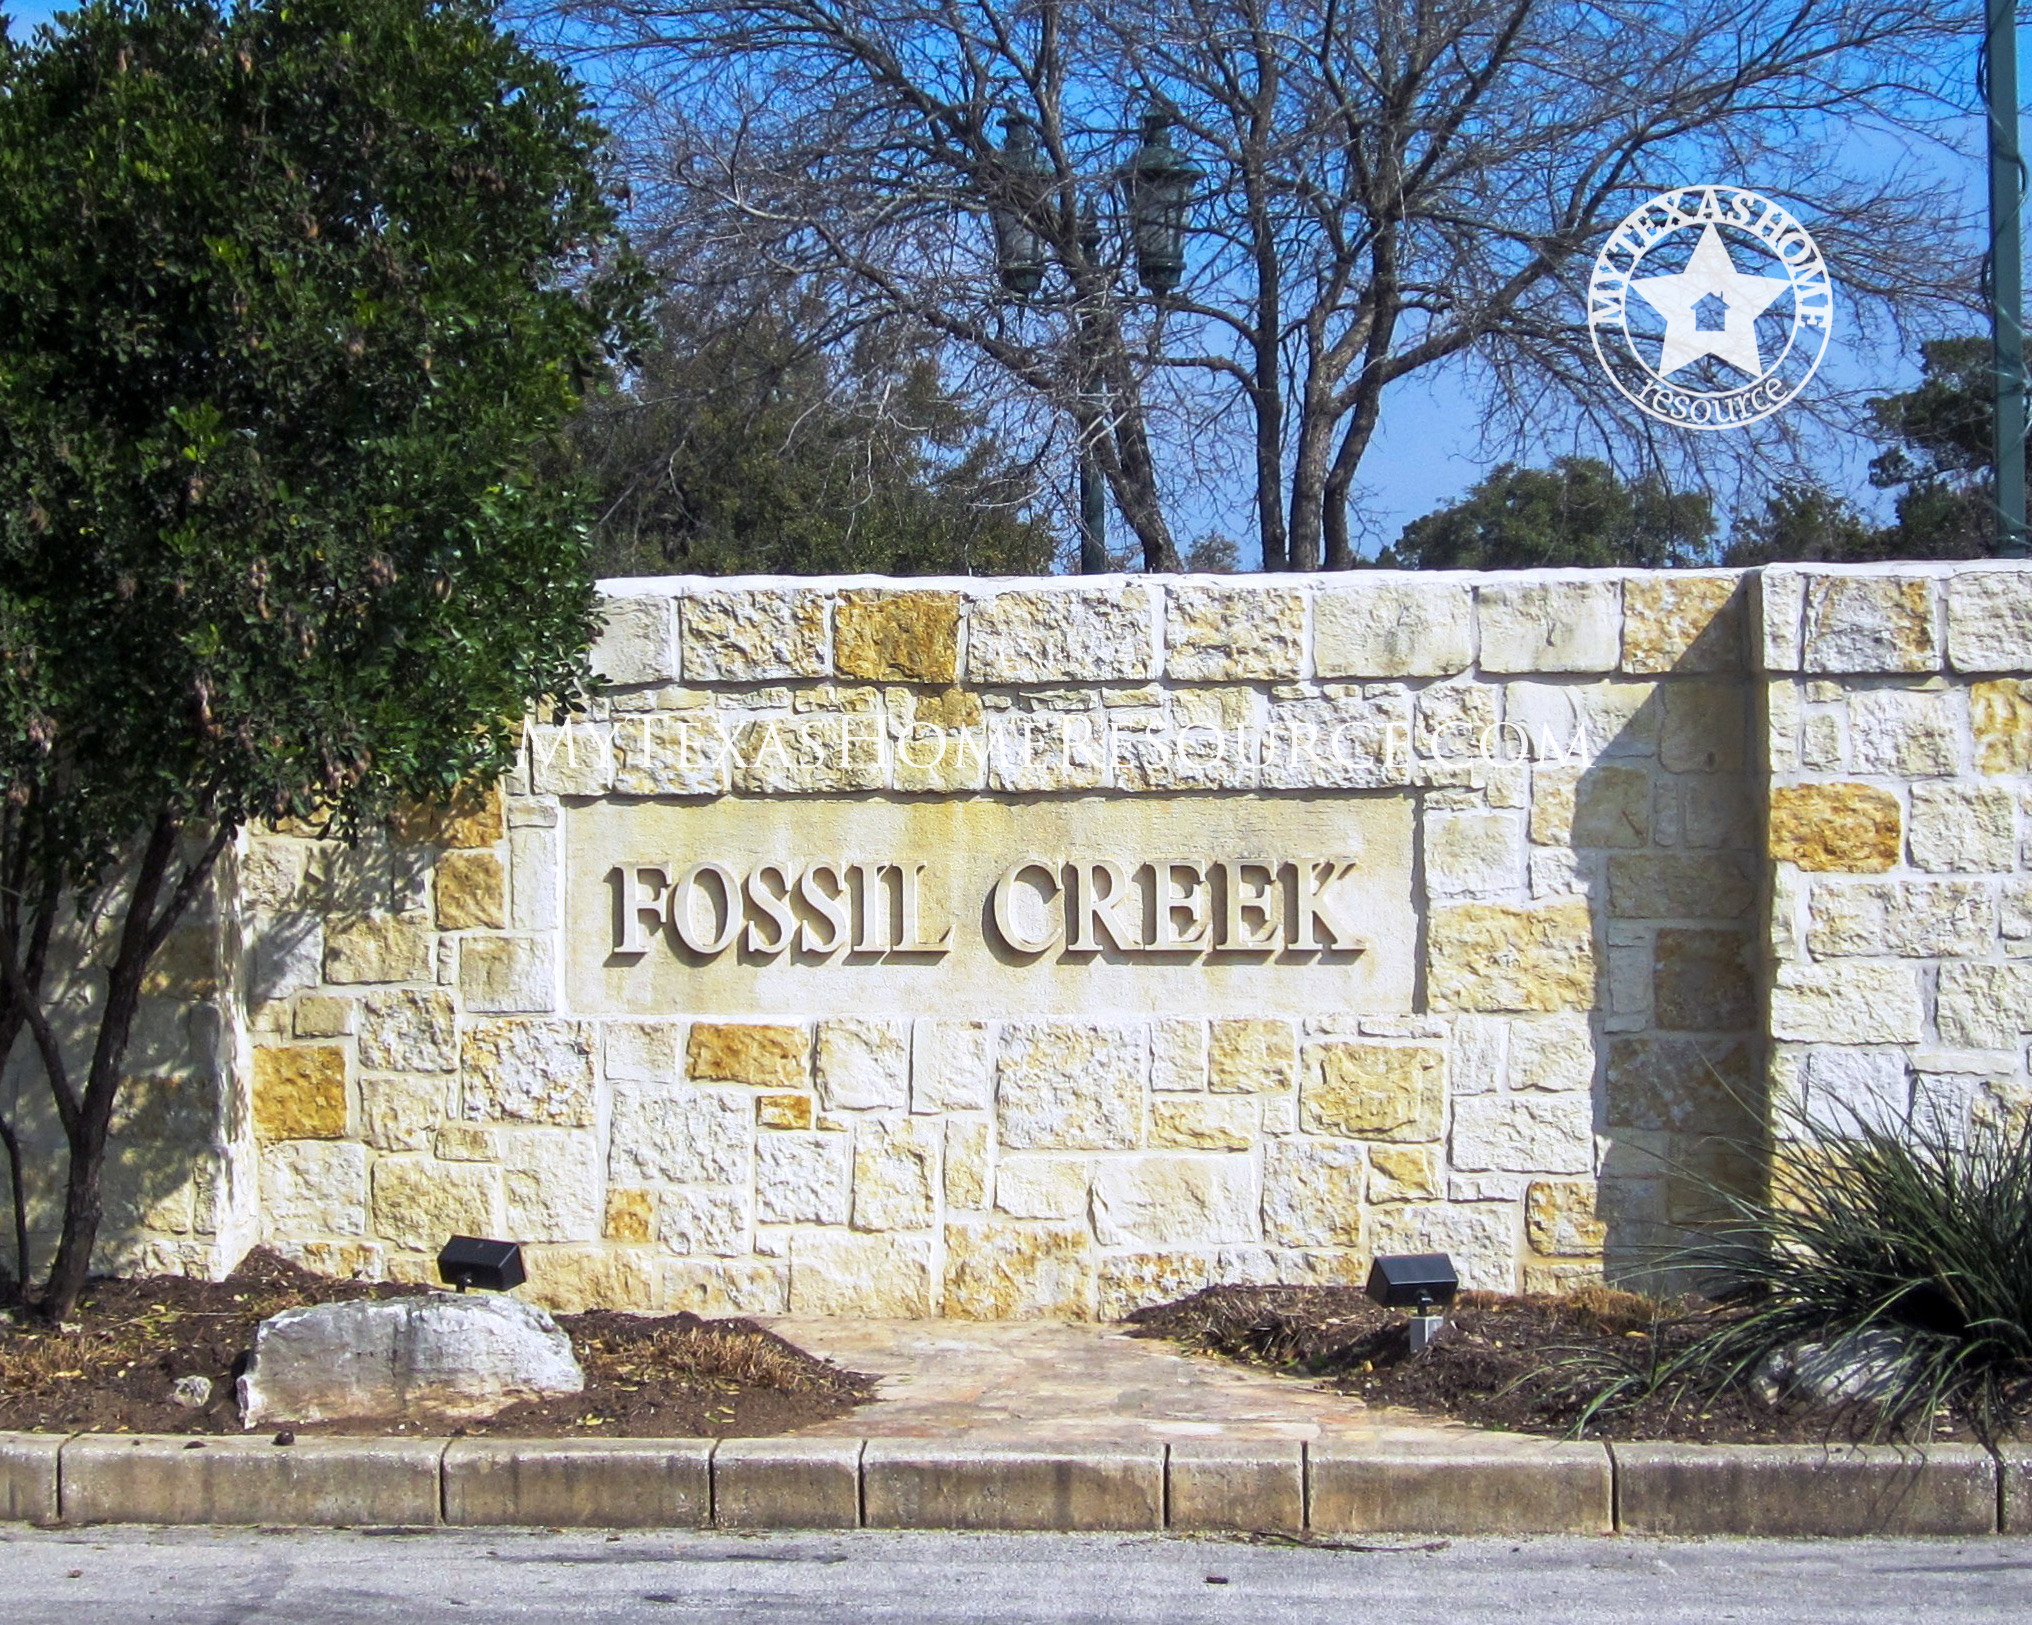 Fossil Creek Community San Antonio, TX